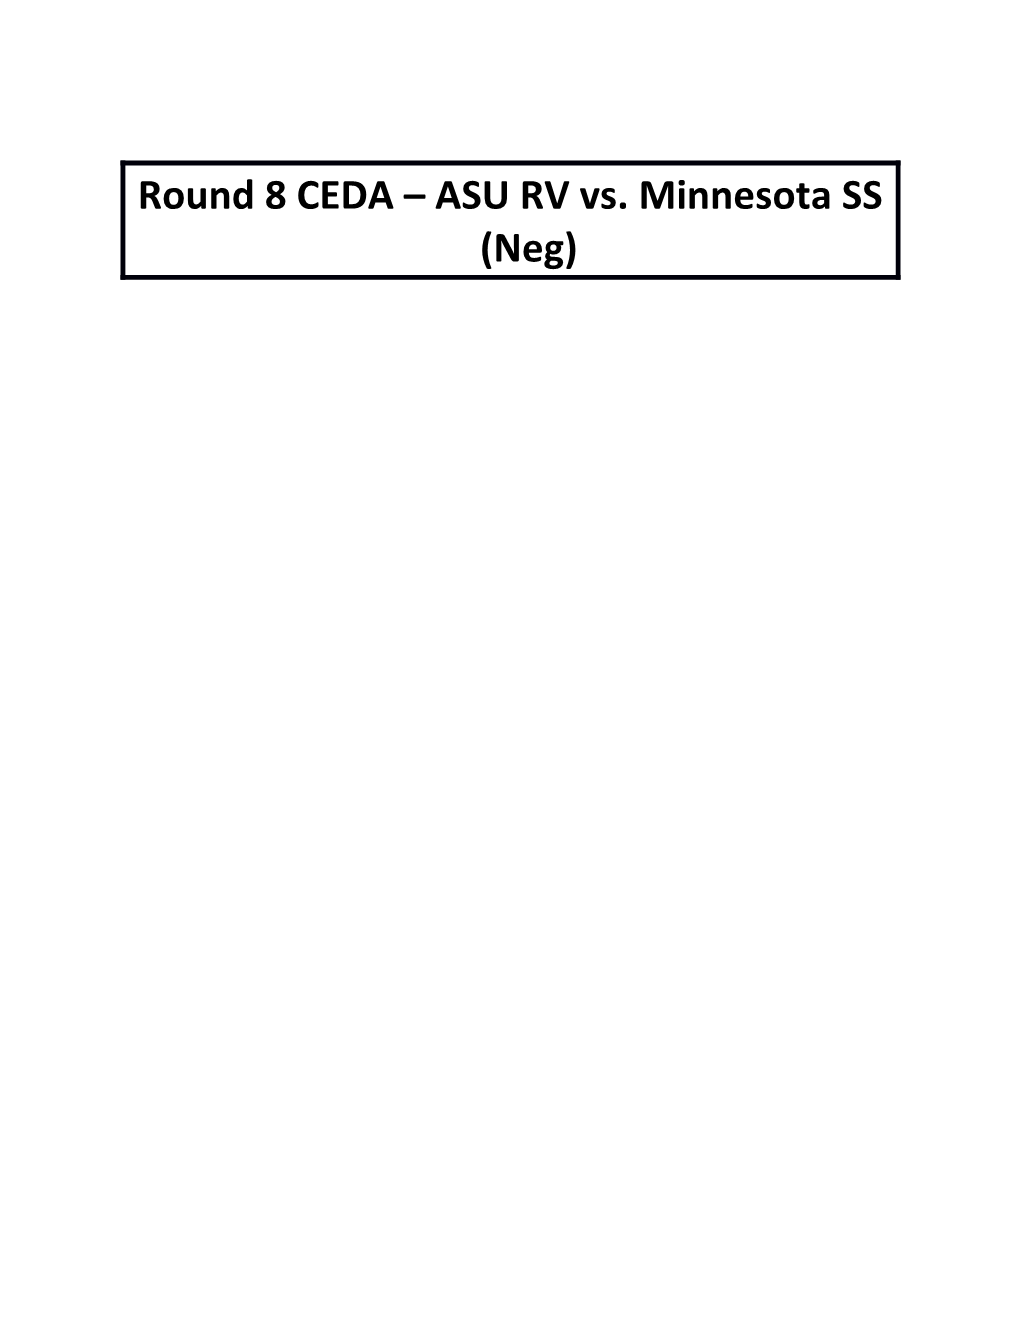 Round 8 CEDA ASU RV Vs. Minnesota SS (Neg)